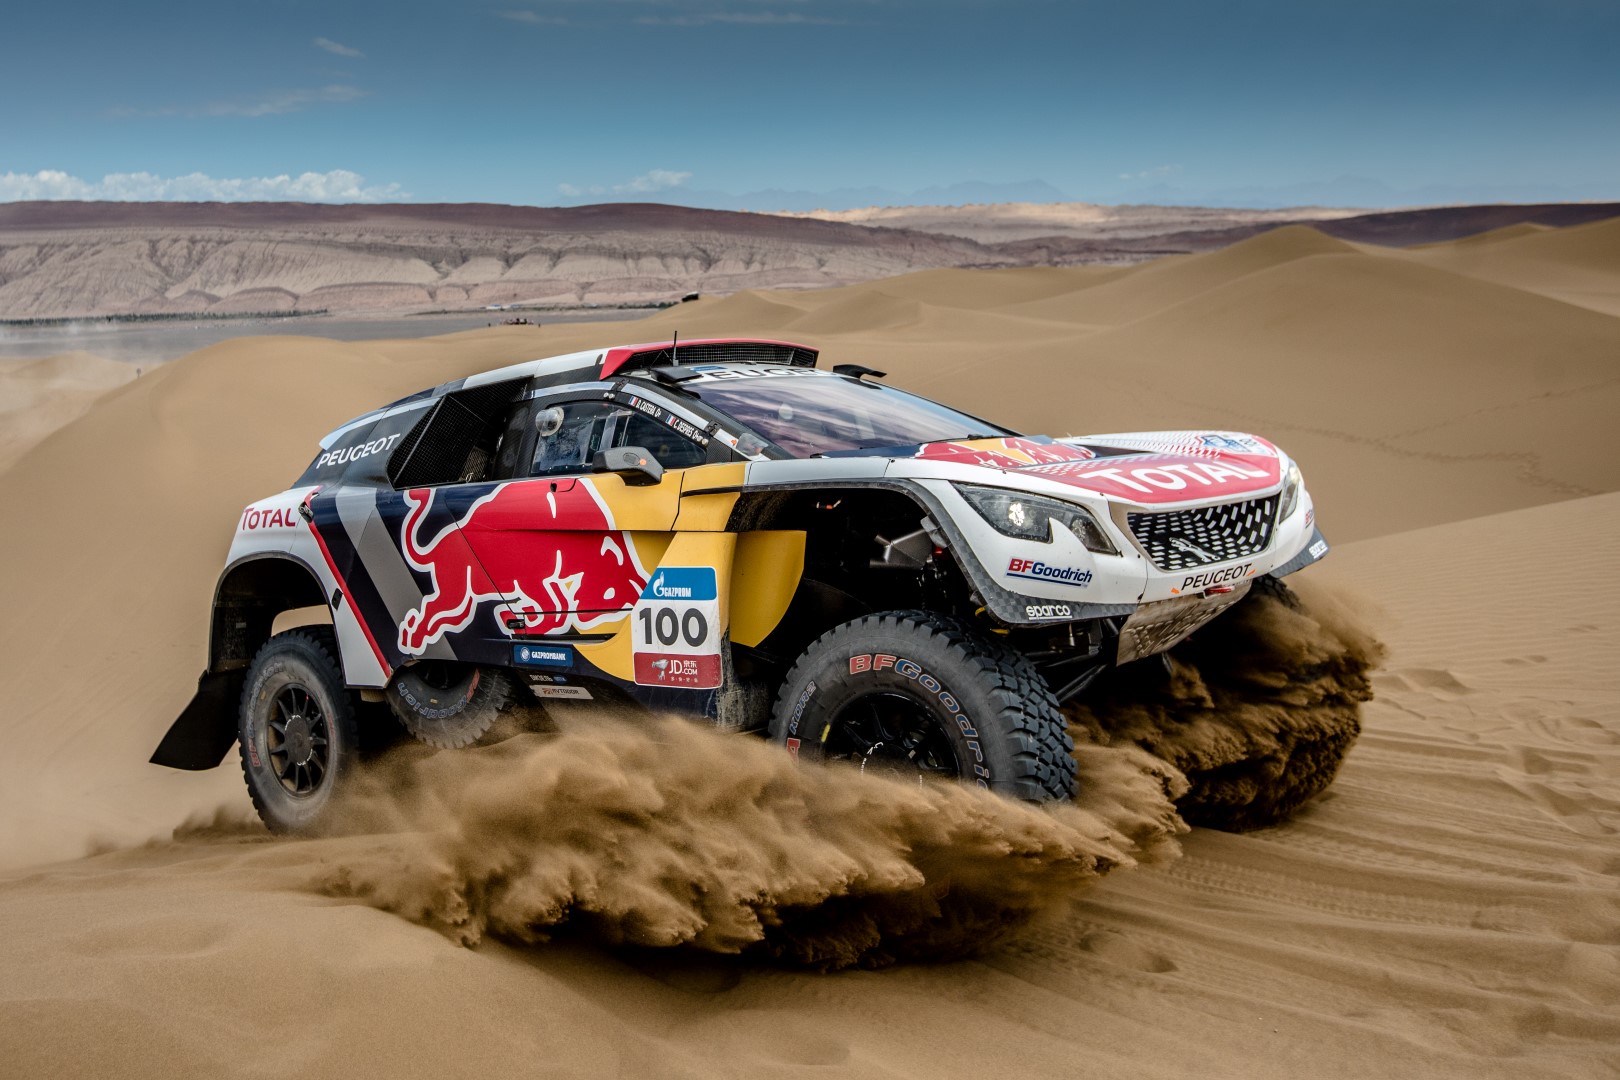  Peugeot Sport parteciperà  dal 4 al 10 ottobre al Rally del Marocco